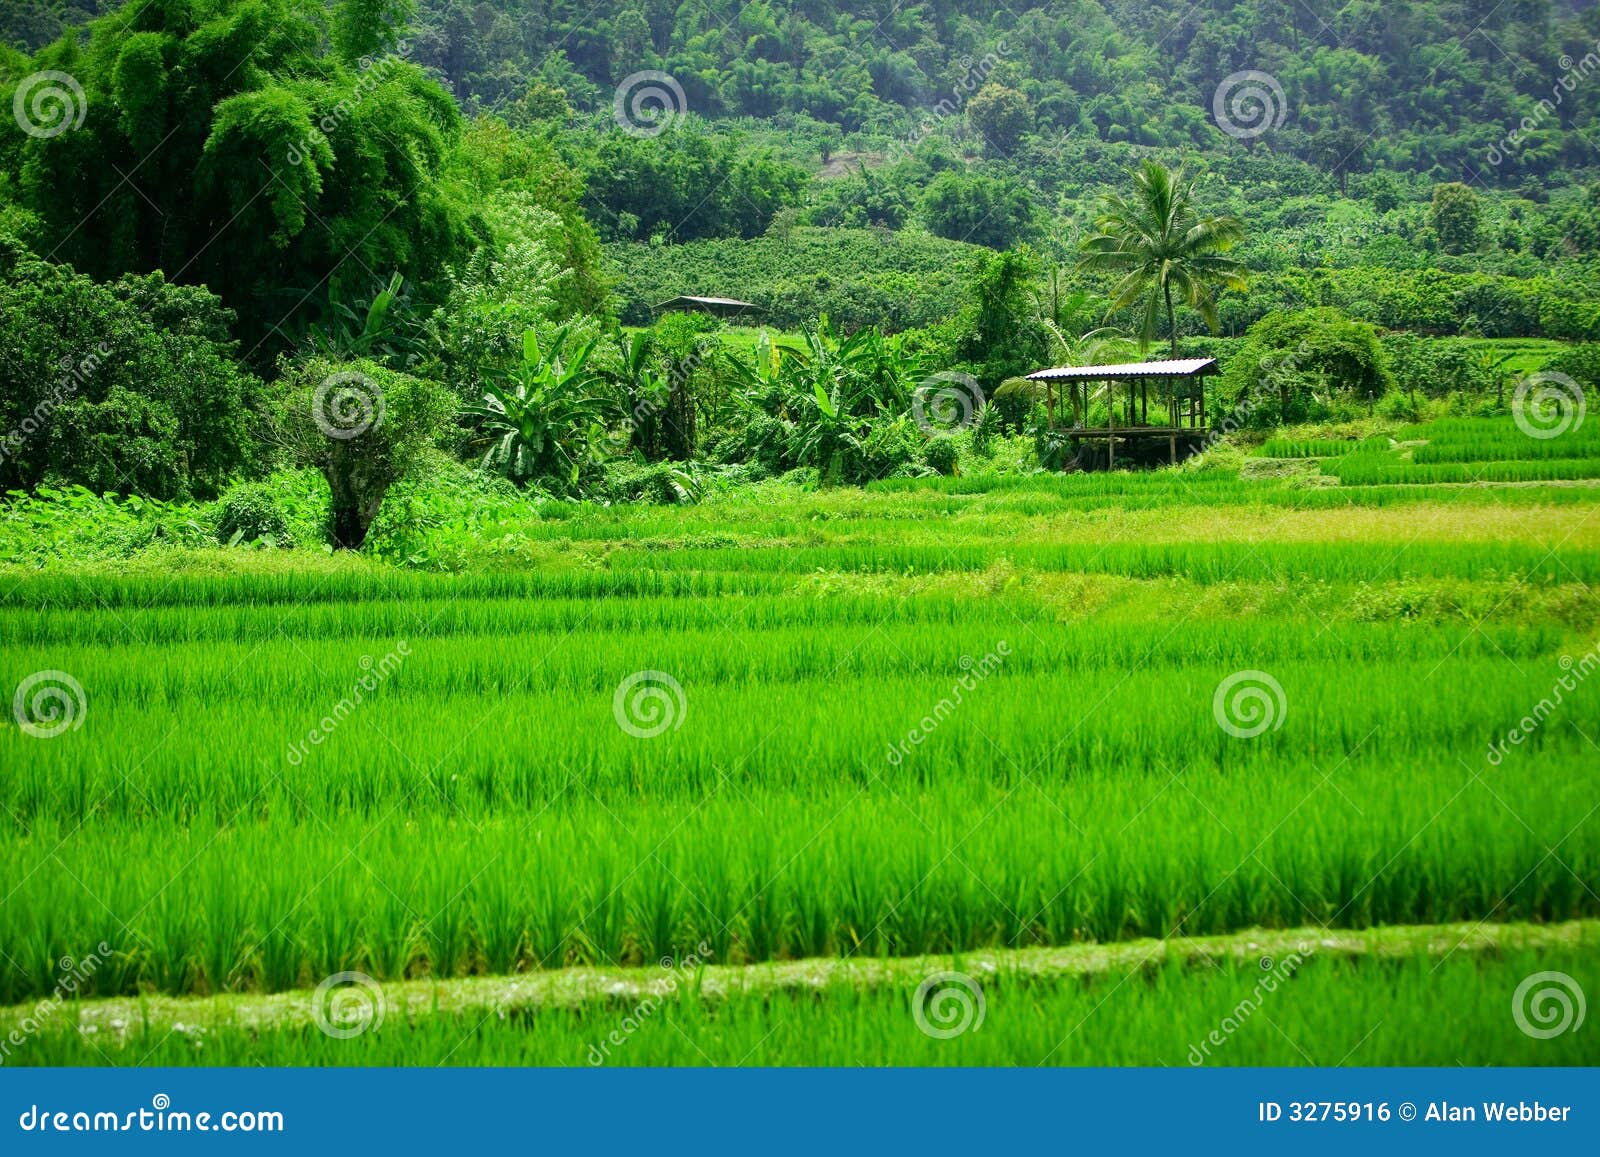 rice paddies